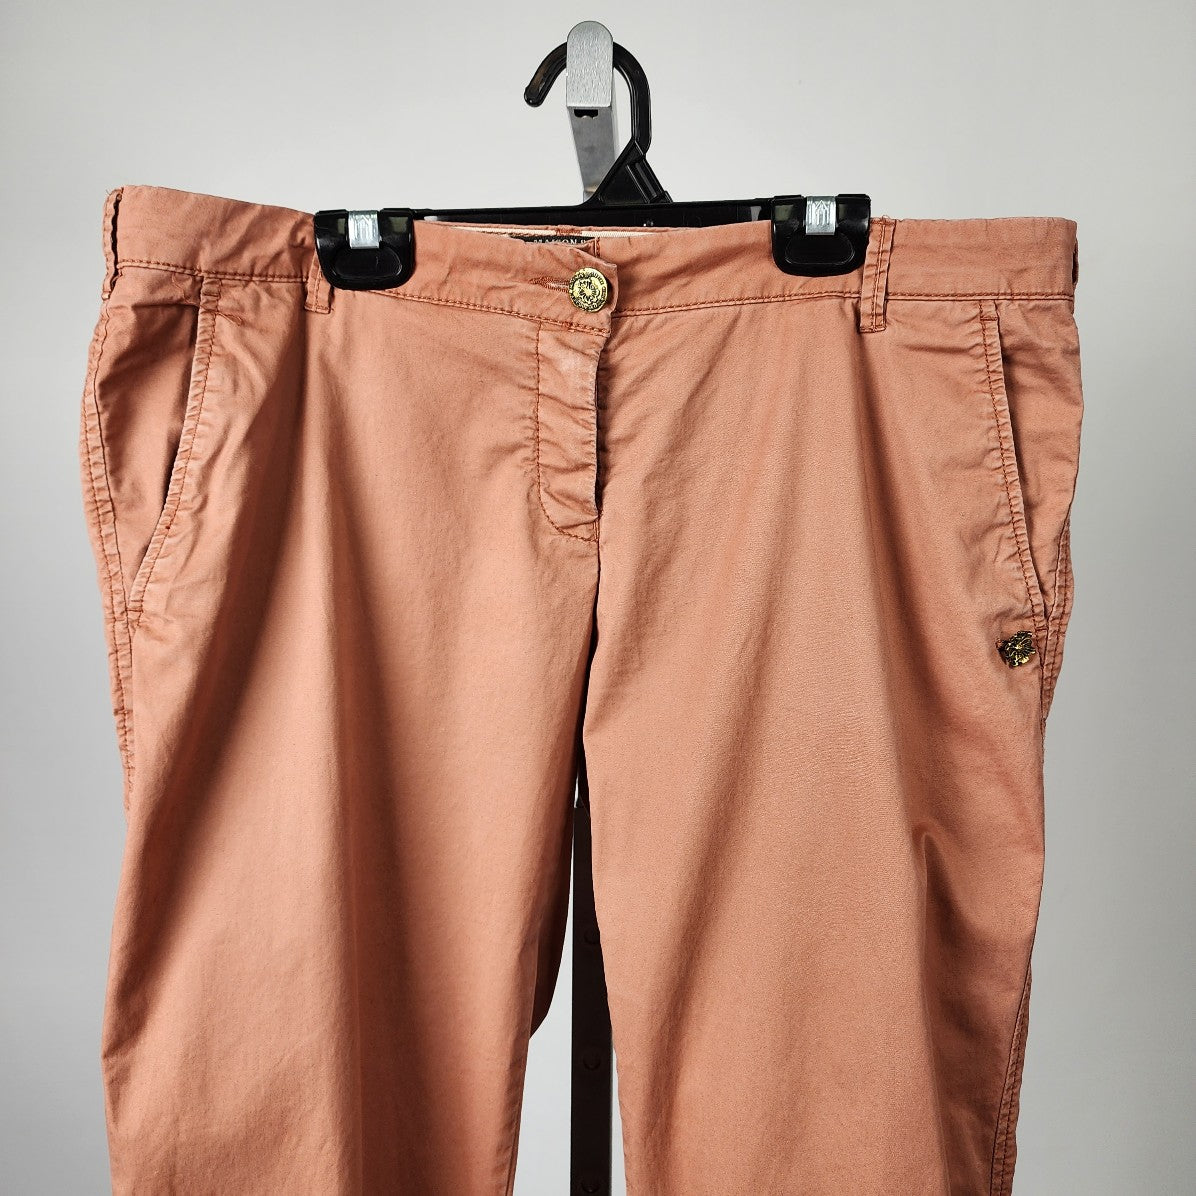 Maison Scotch Brown Cotton Blend Straight Leg Pants Size 31/32